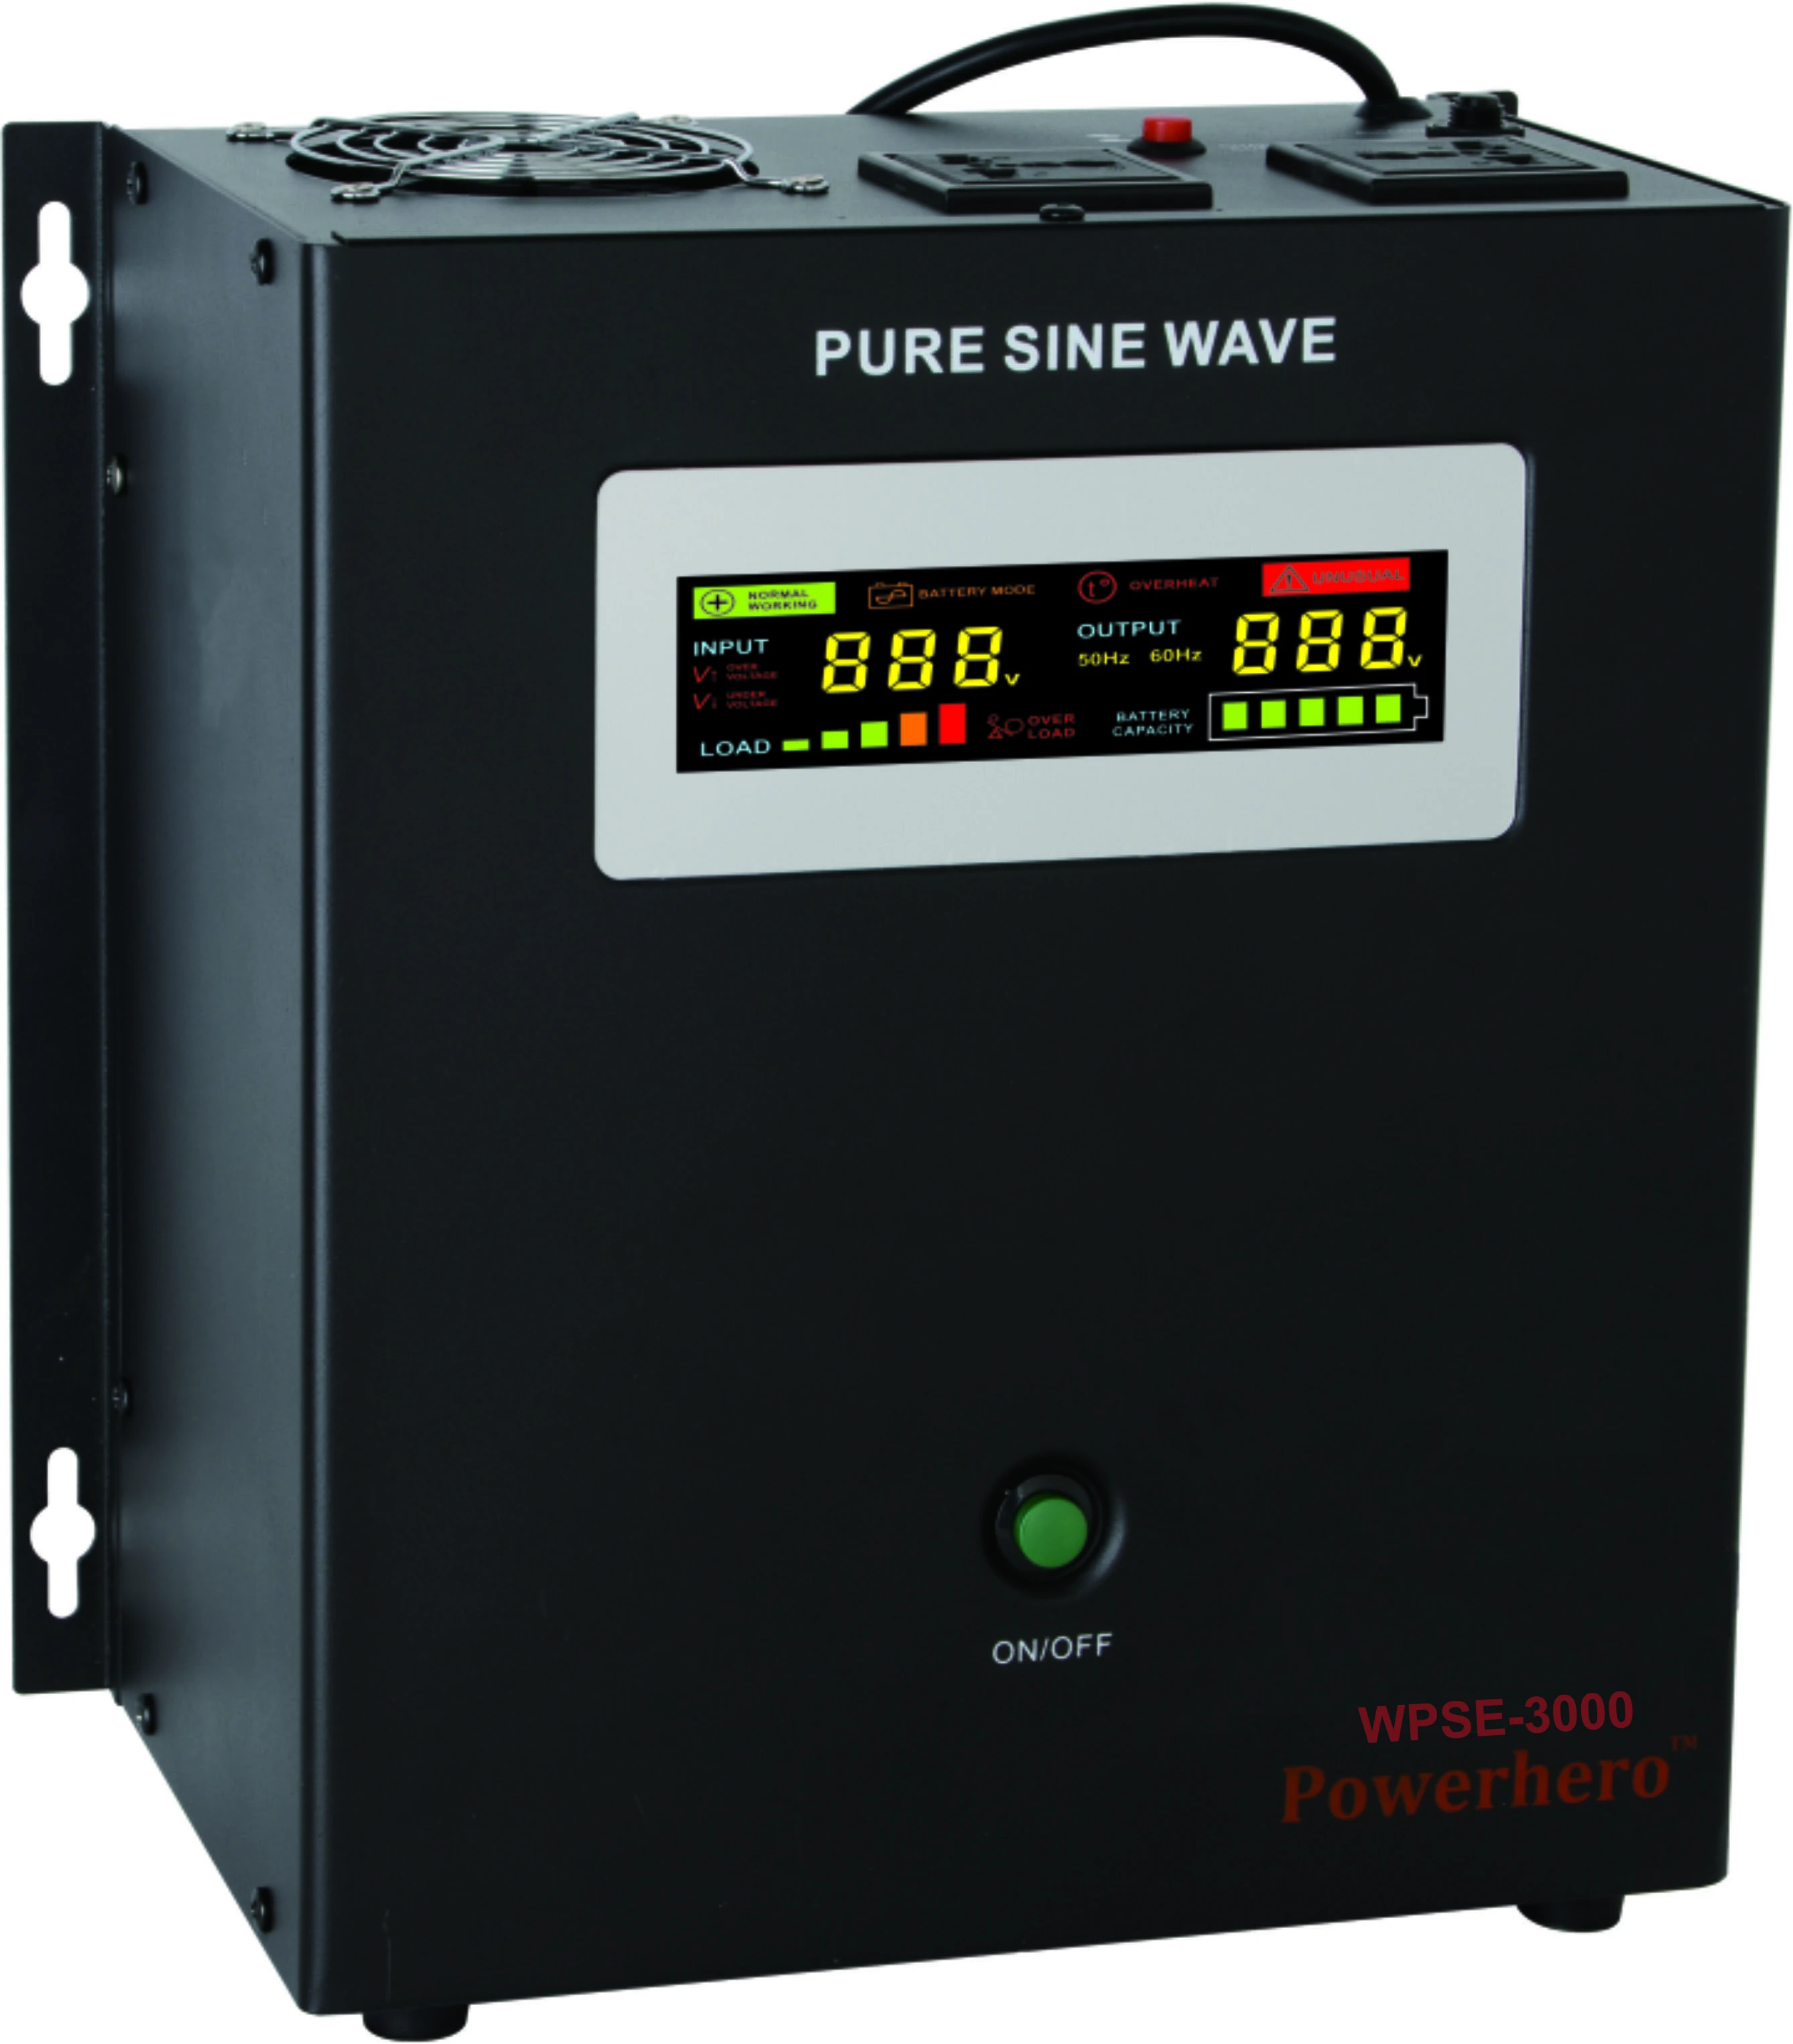 WPSE-3000 Wall type pure sine wave inverter 1